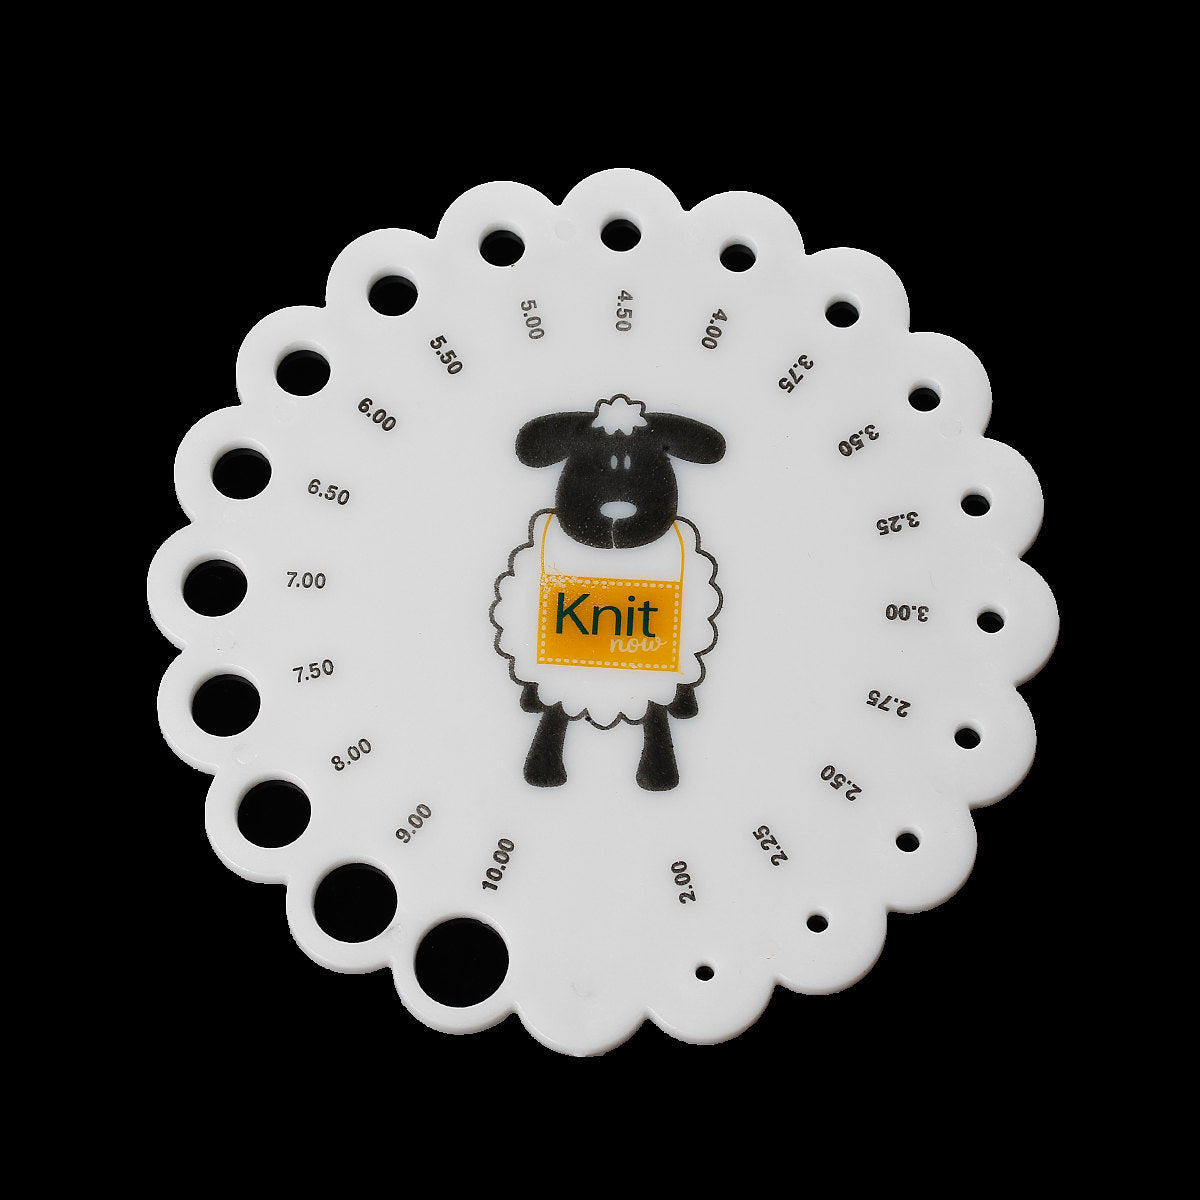 Acrylic Knitting Needle Gauge Size Tool White Sheep "knit Now" Pattern 9.8cm(3 7/8") Diameter